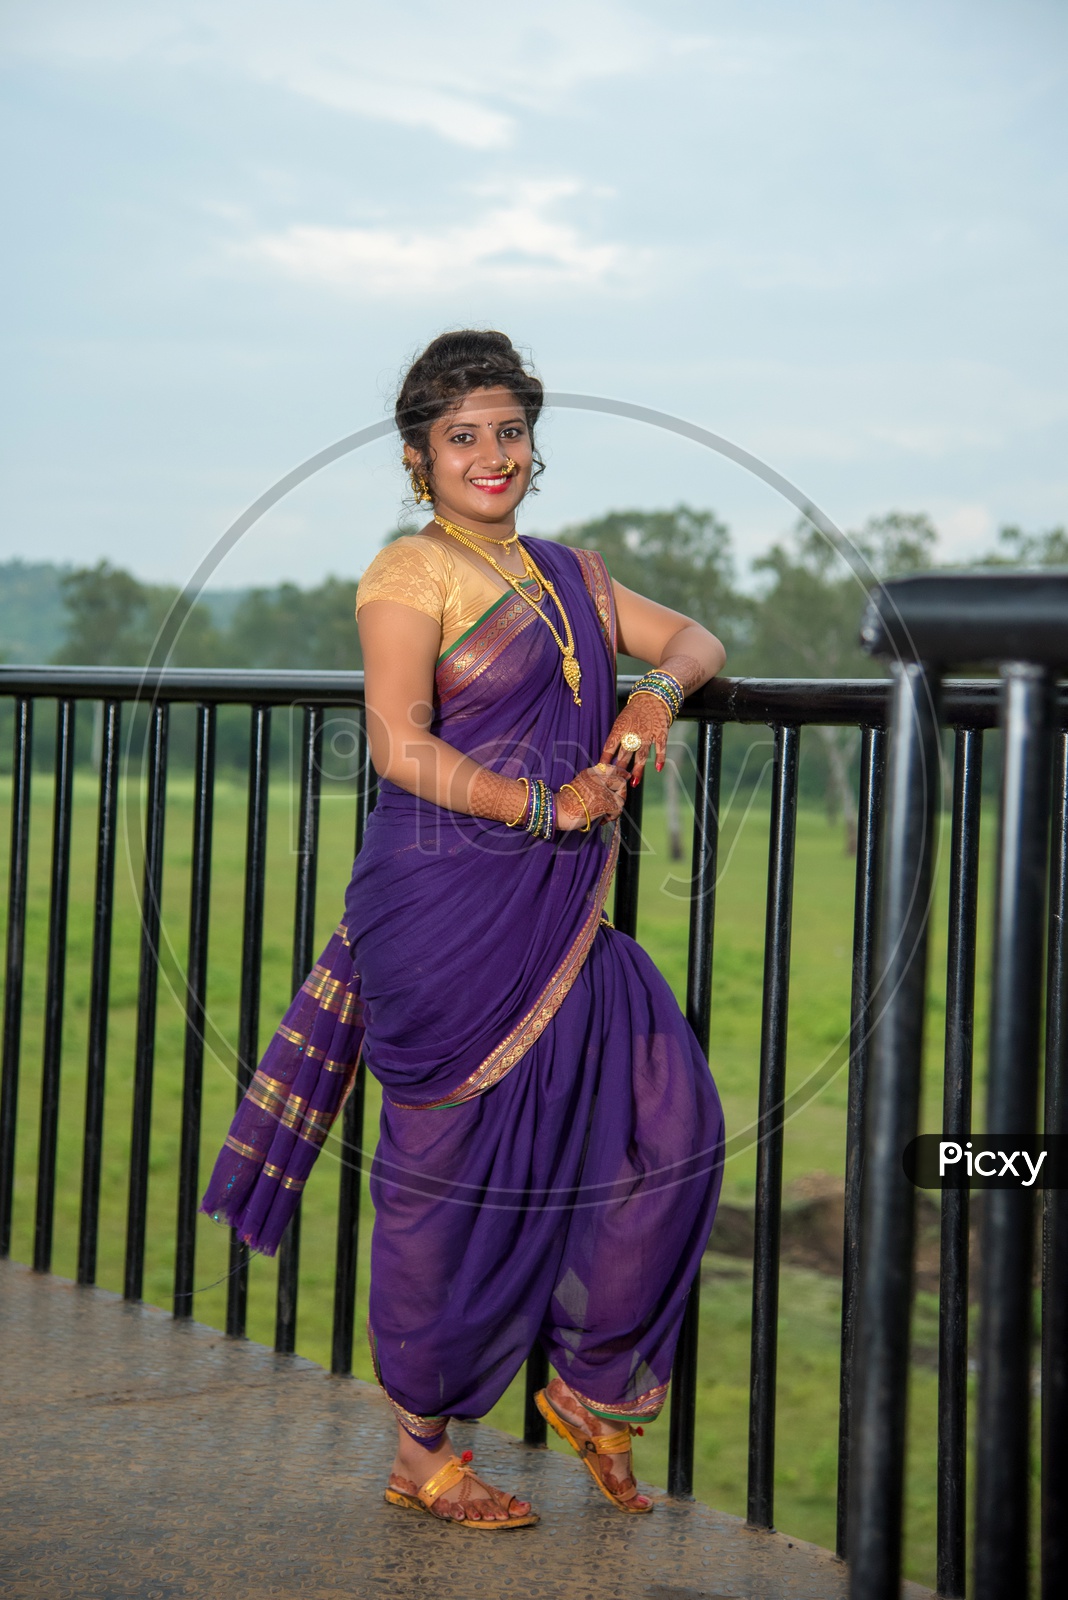 Nauvari | Nauvari saree, Saree poses, Indian wedding photography poses